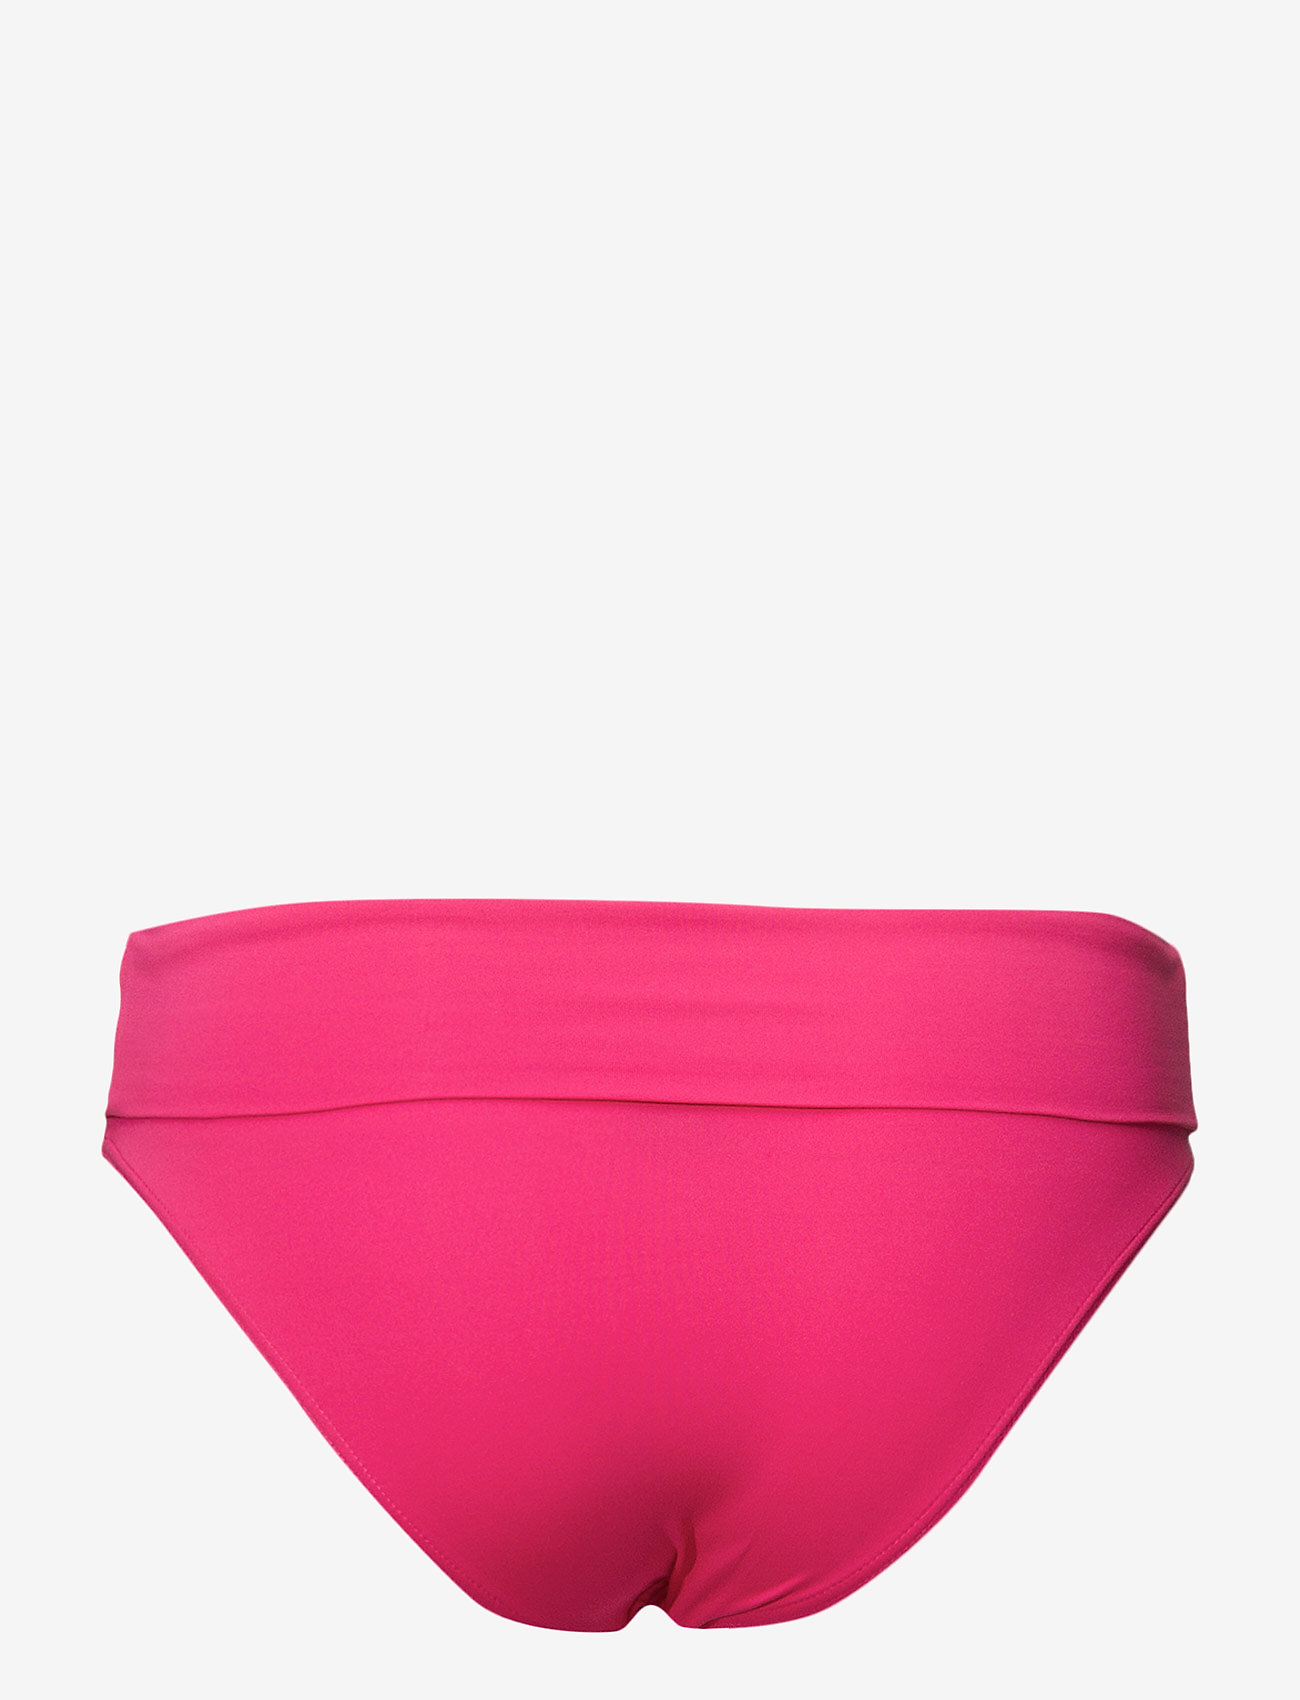 Panos Emporio - Athena-9 Bottom - bikinibriefs - pink - 1